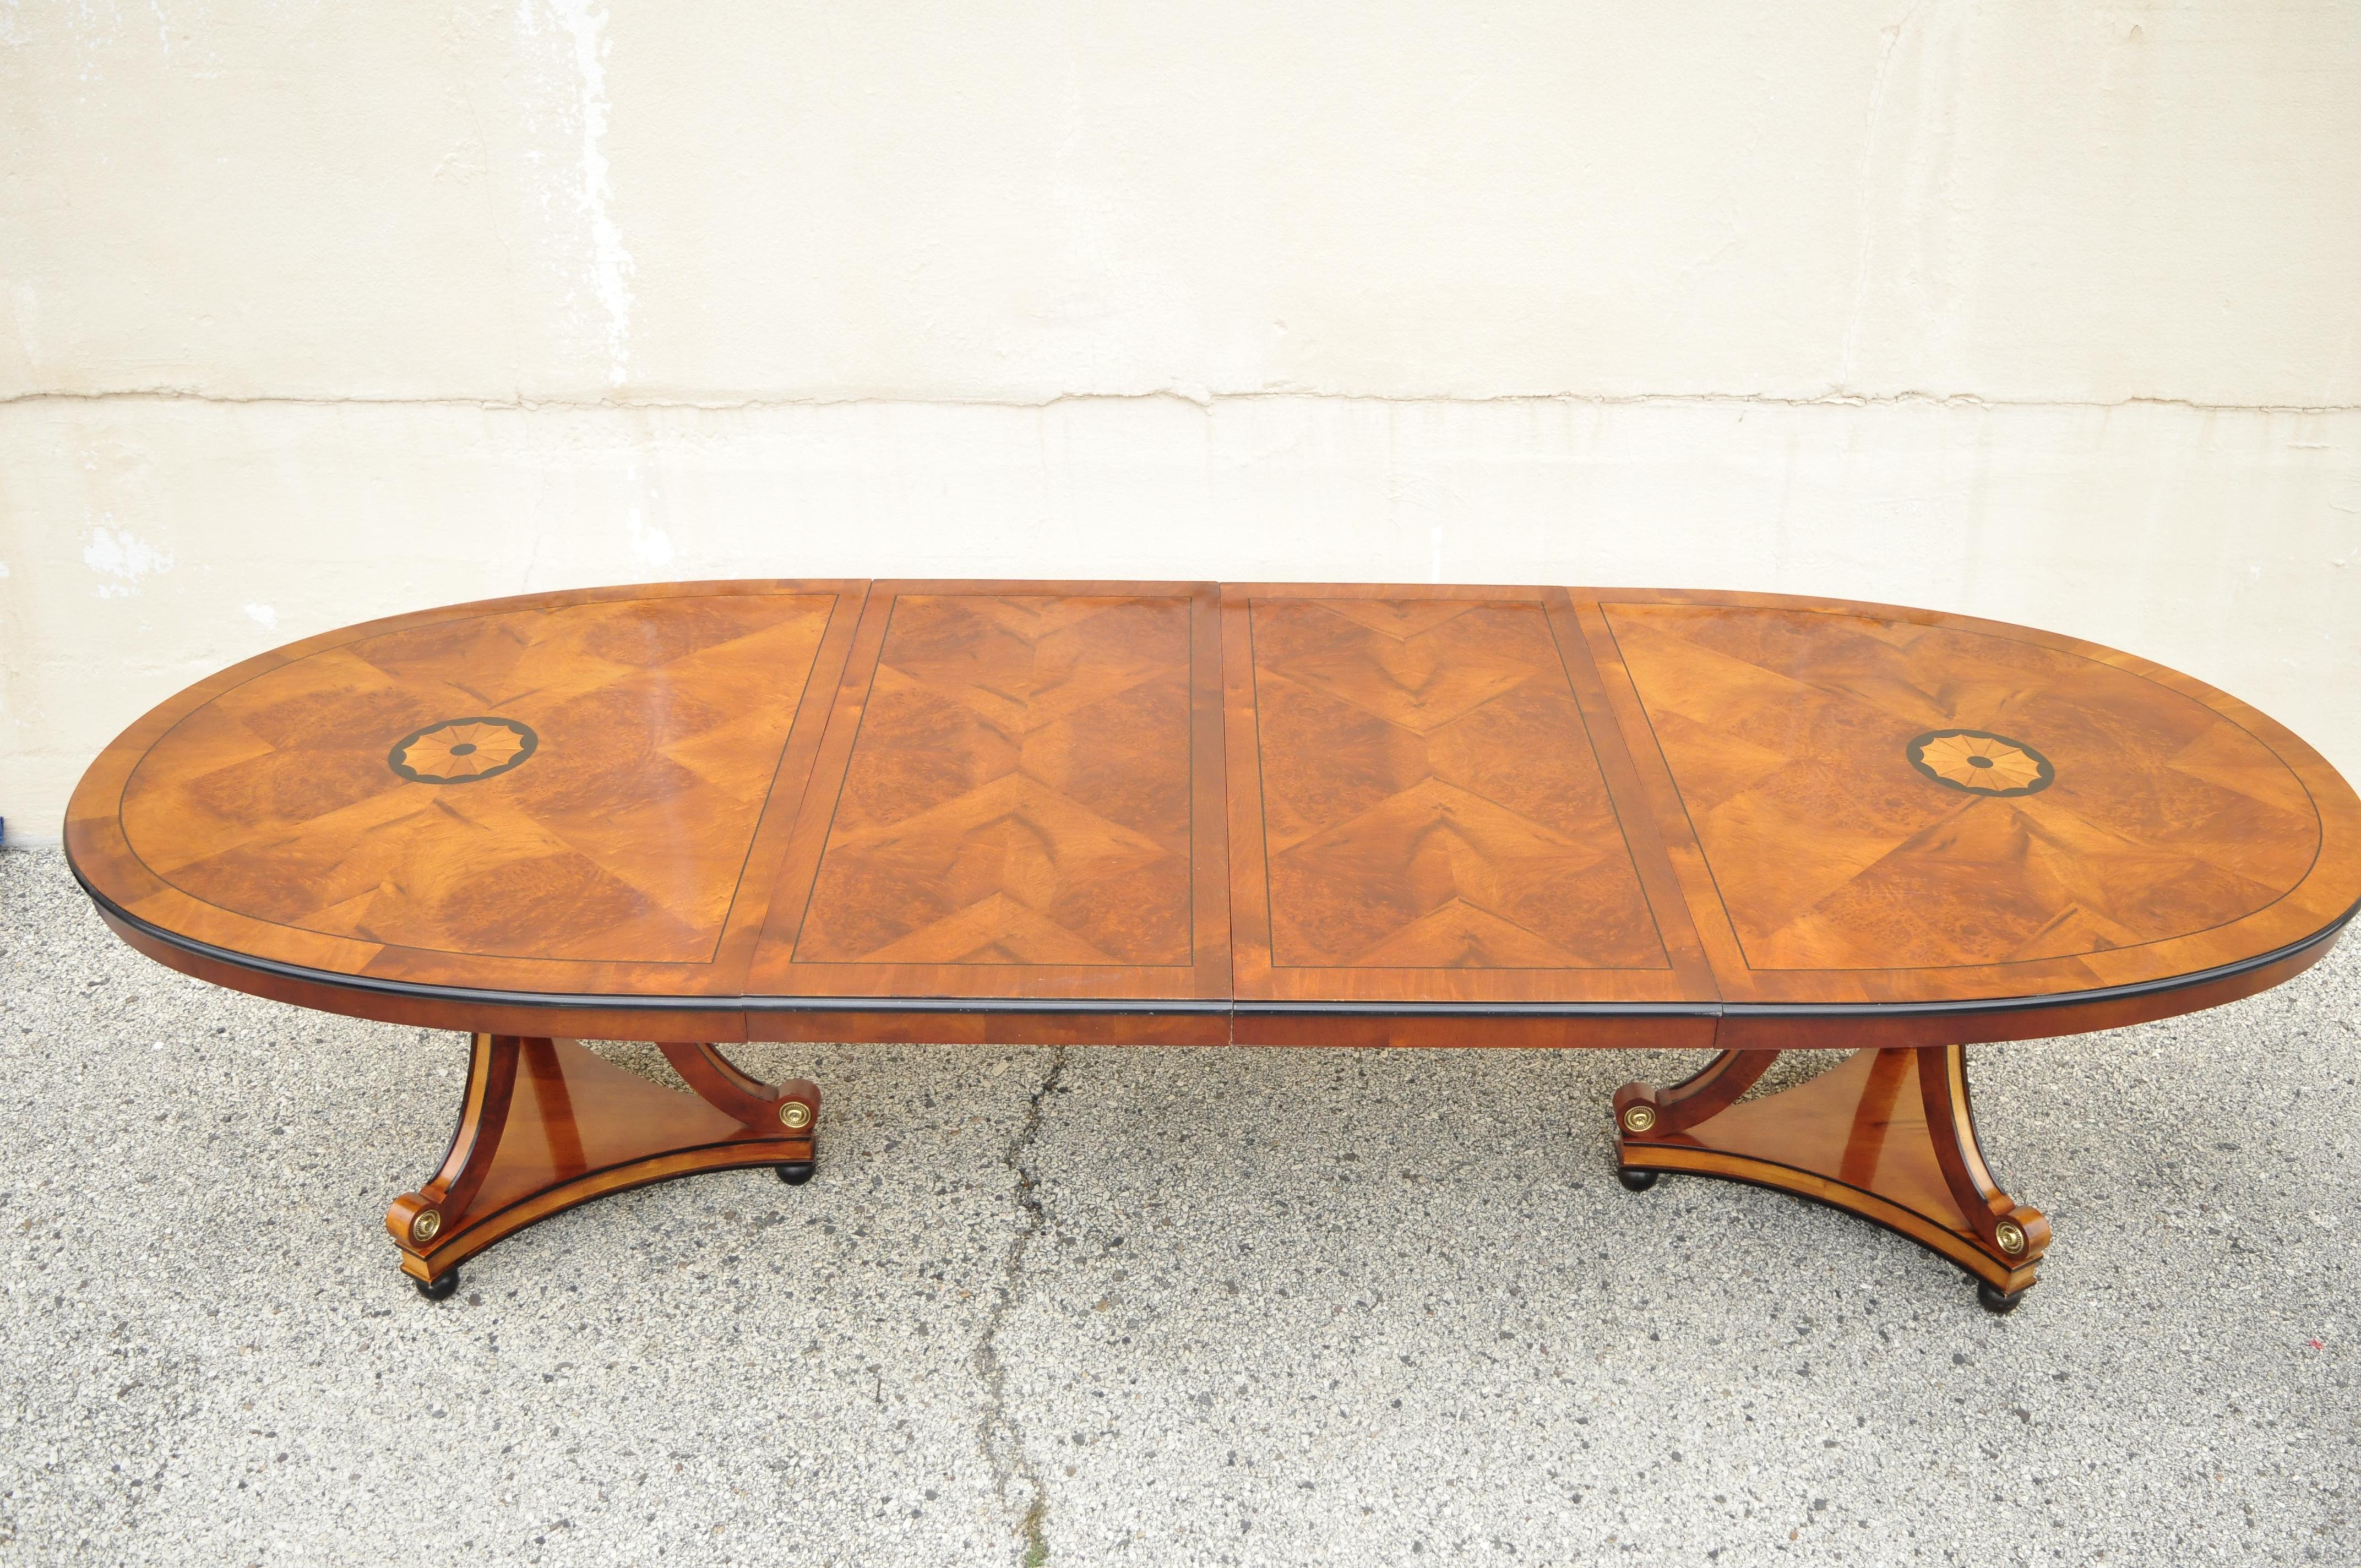 Burl Century Furniture Co. Capuan Collection Biedermier Double Pedestal Dining Table